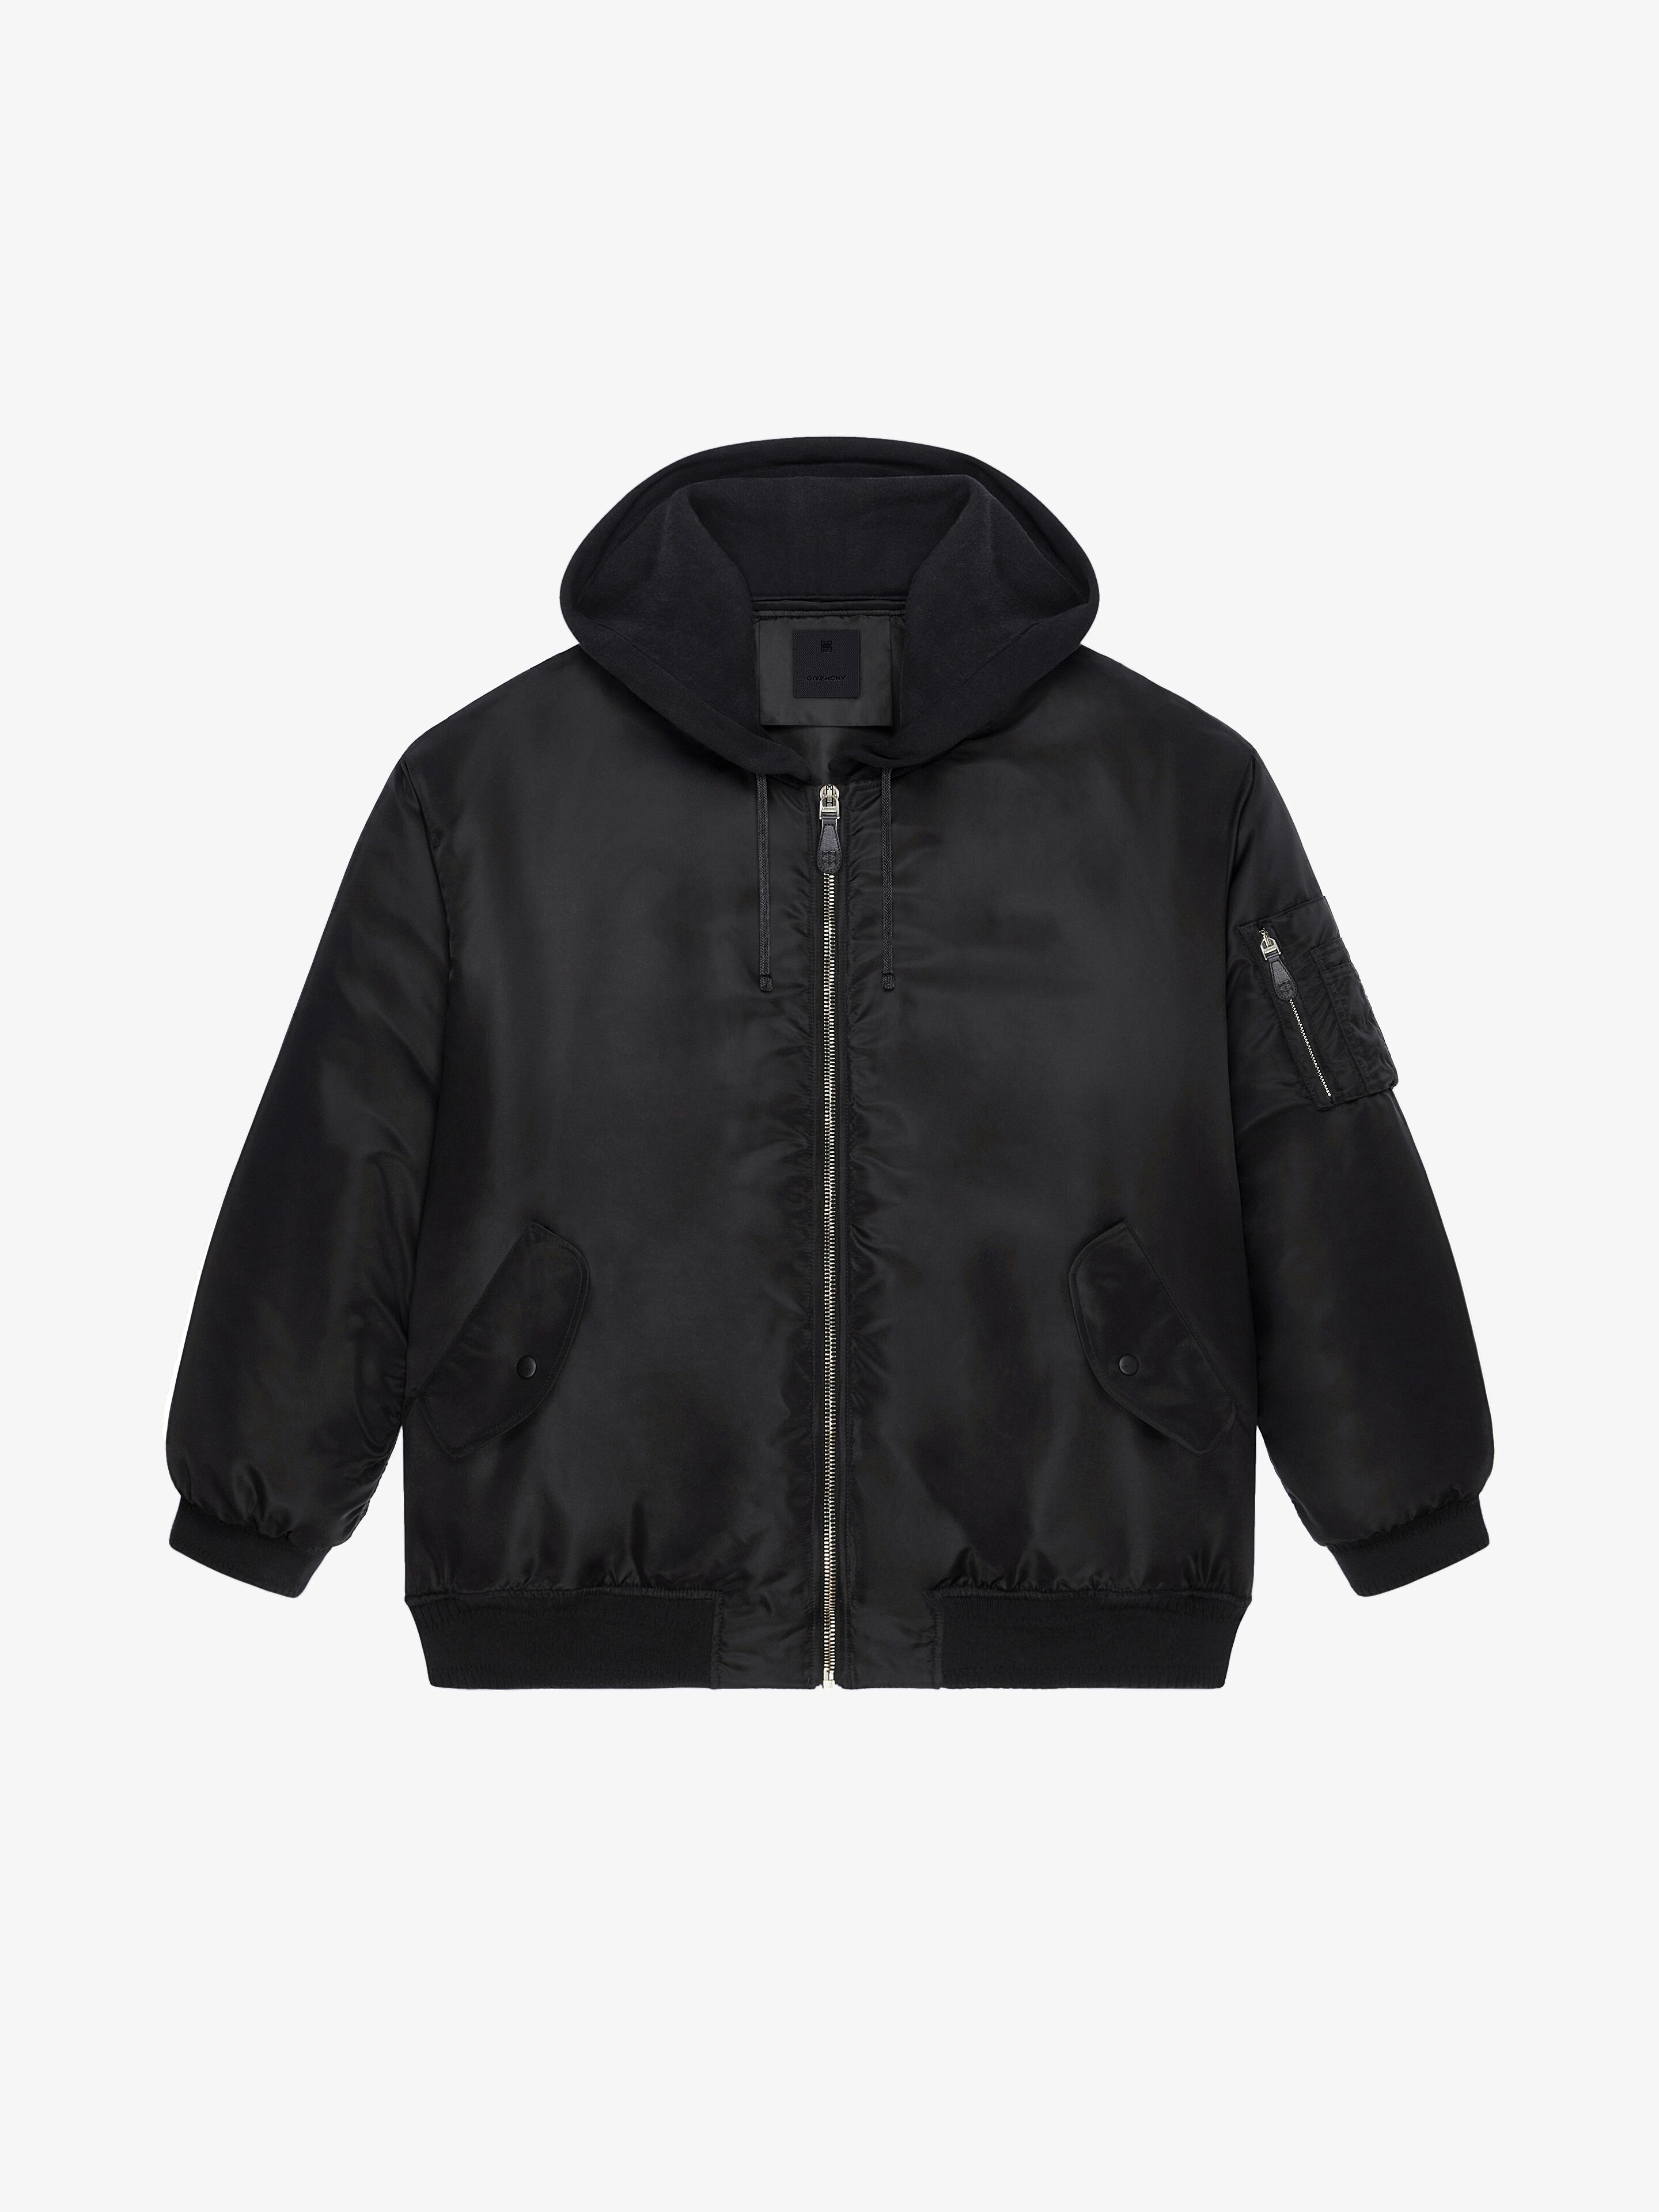 Givenchy Oversized Hooded Bomber Jacket In Black